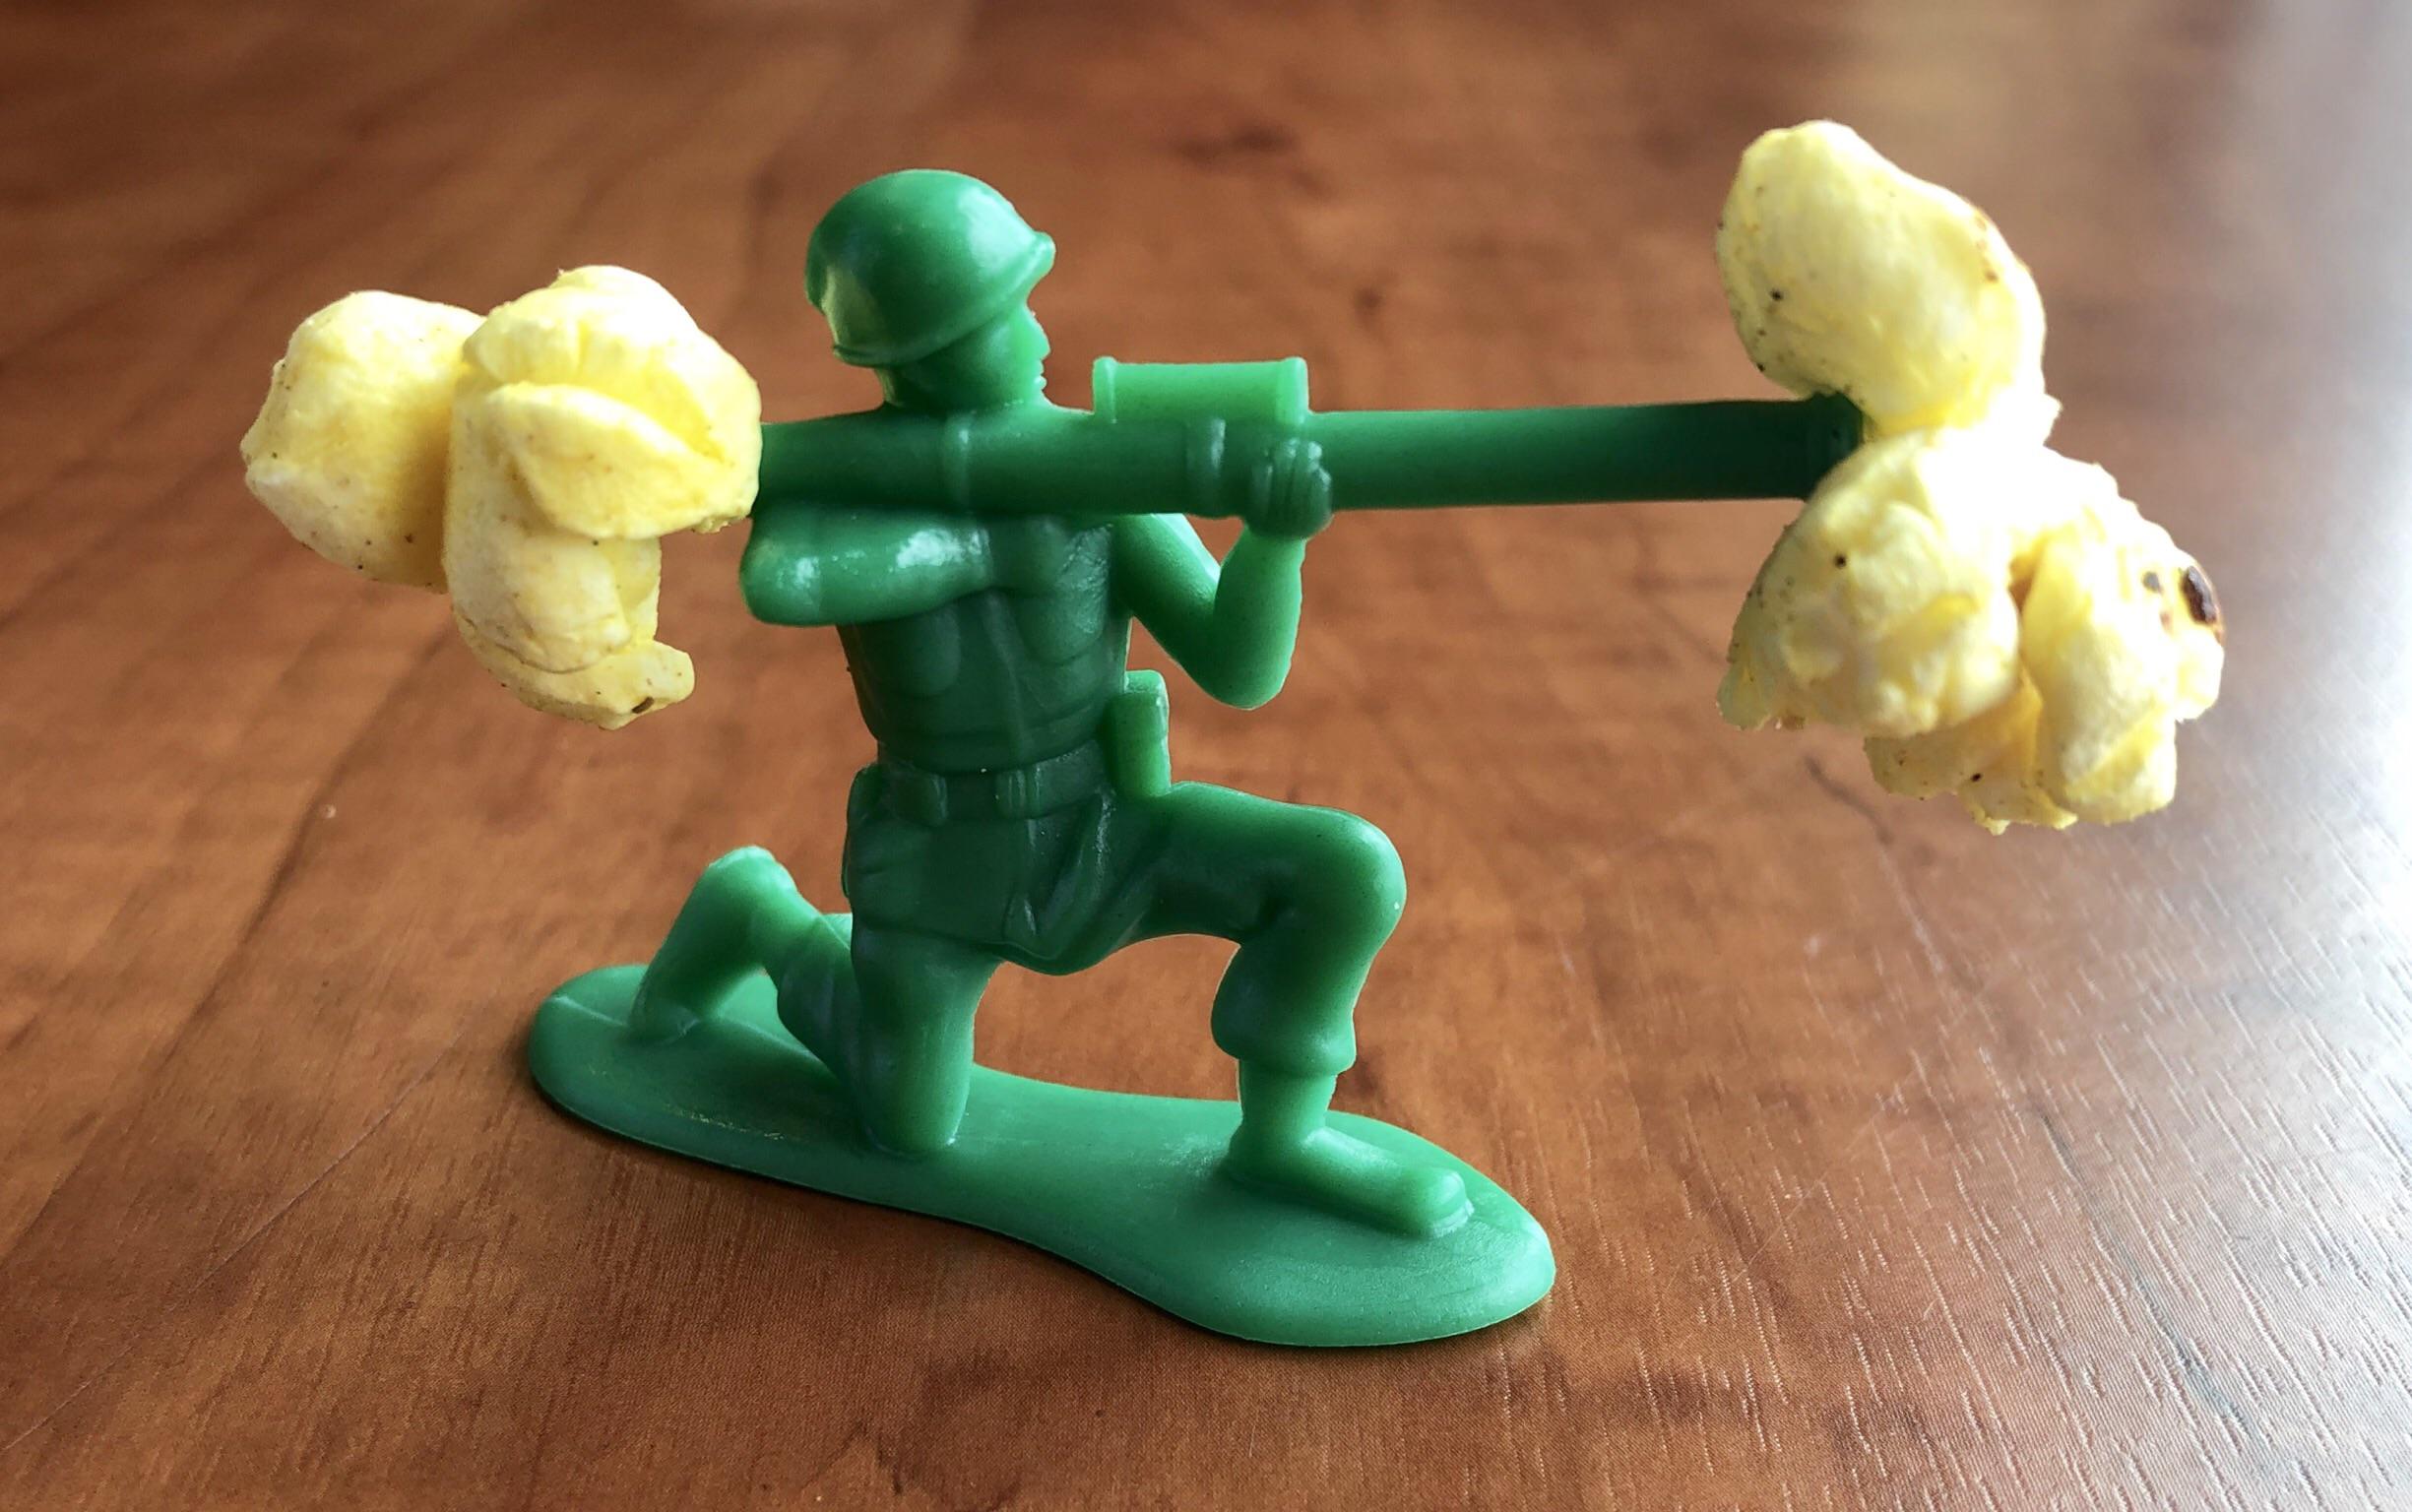 Popcorn+enhances+this+bazooka+soldier.